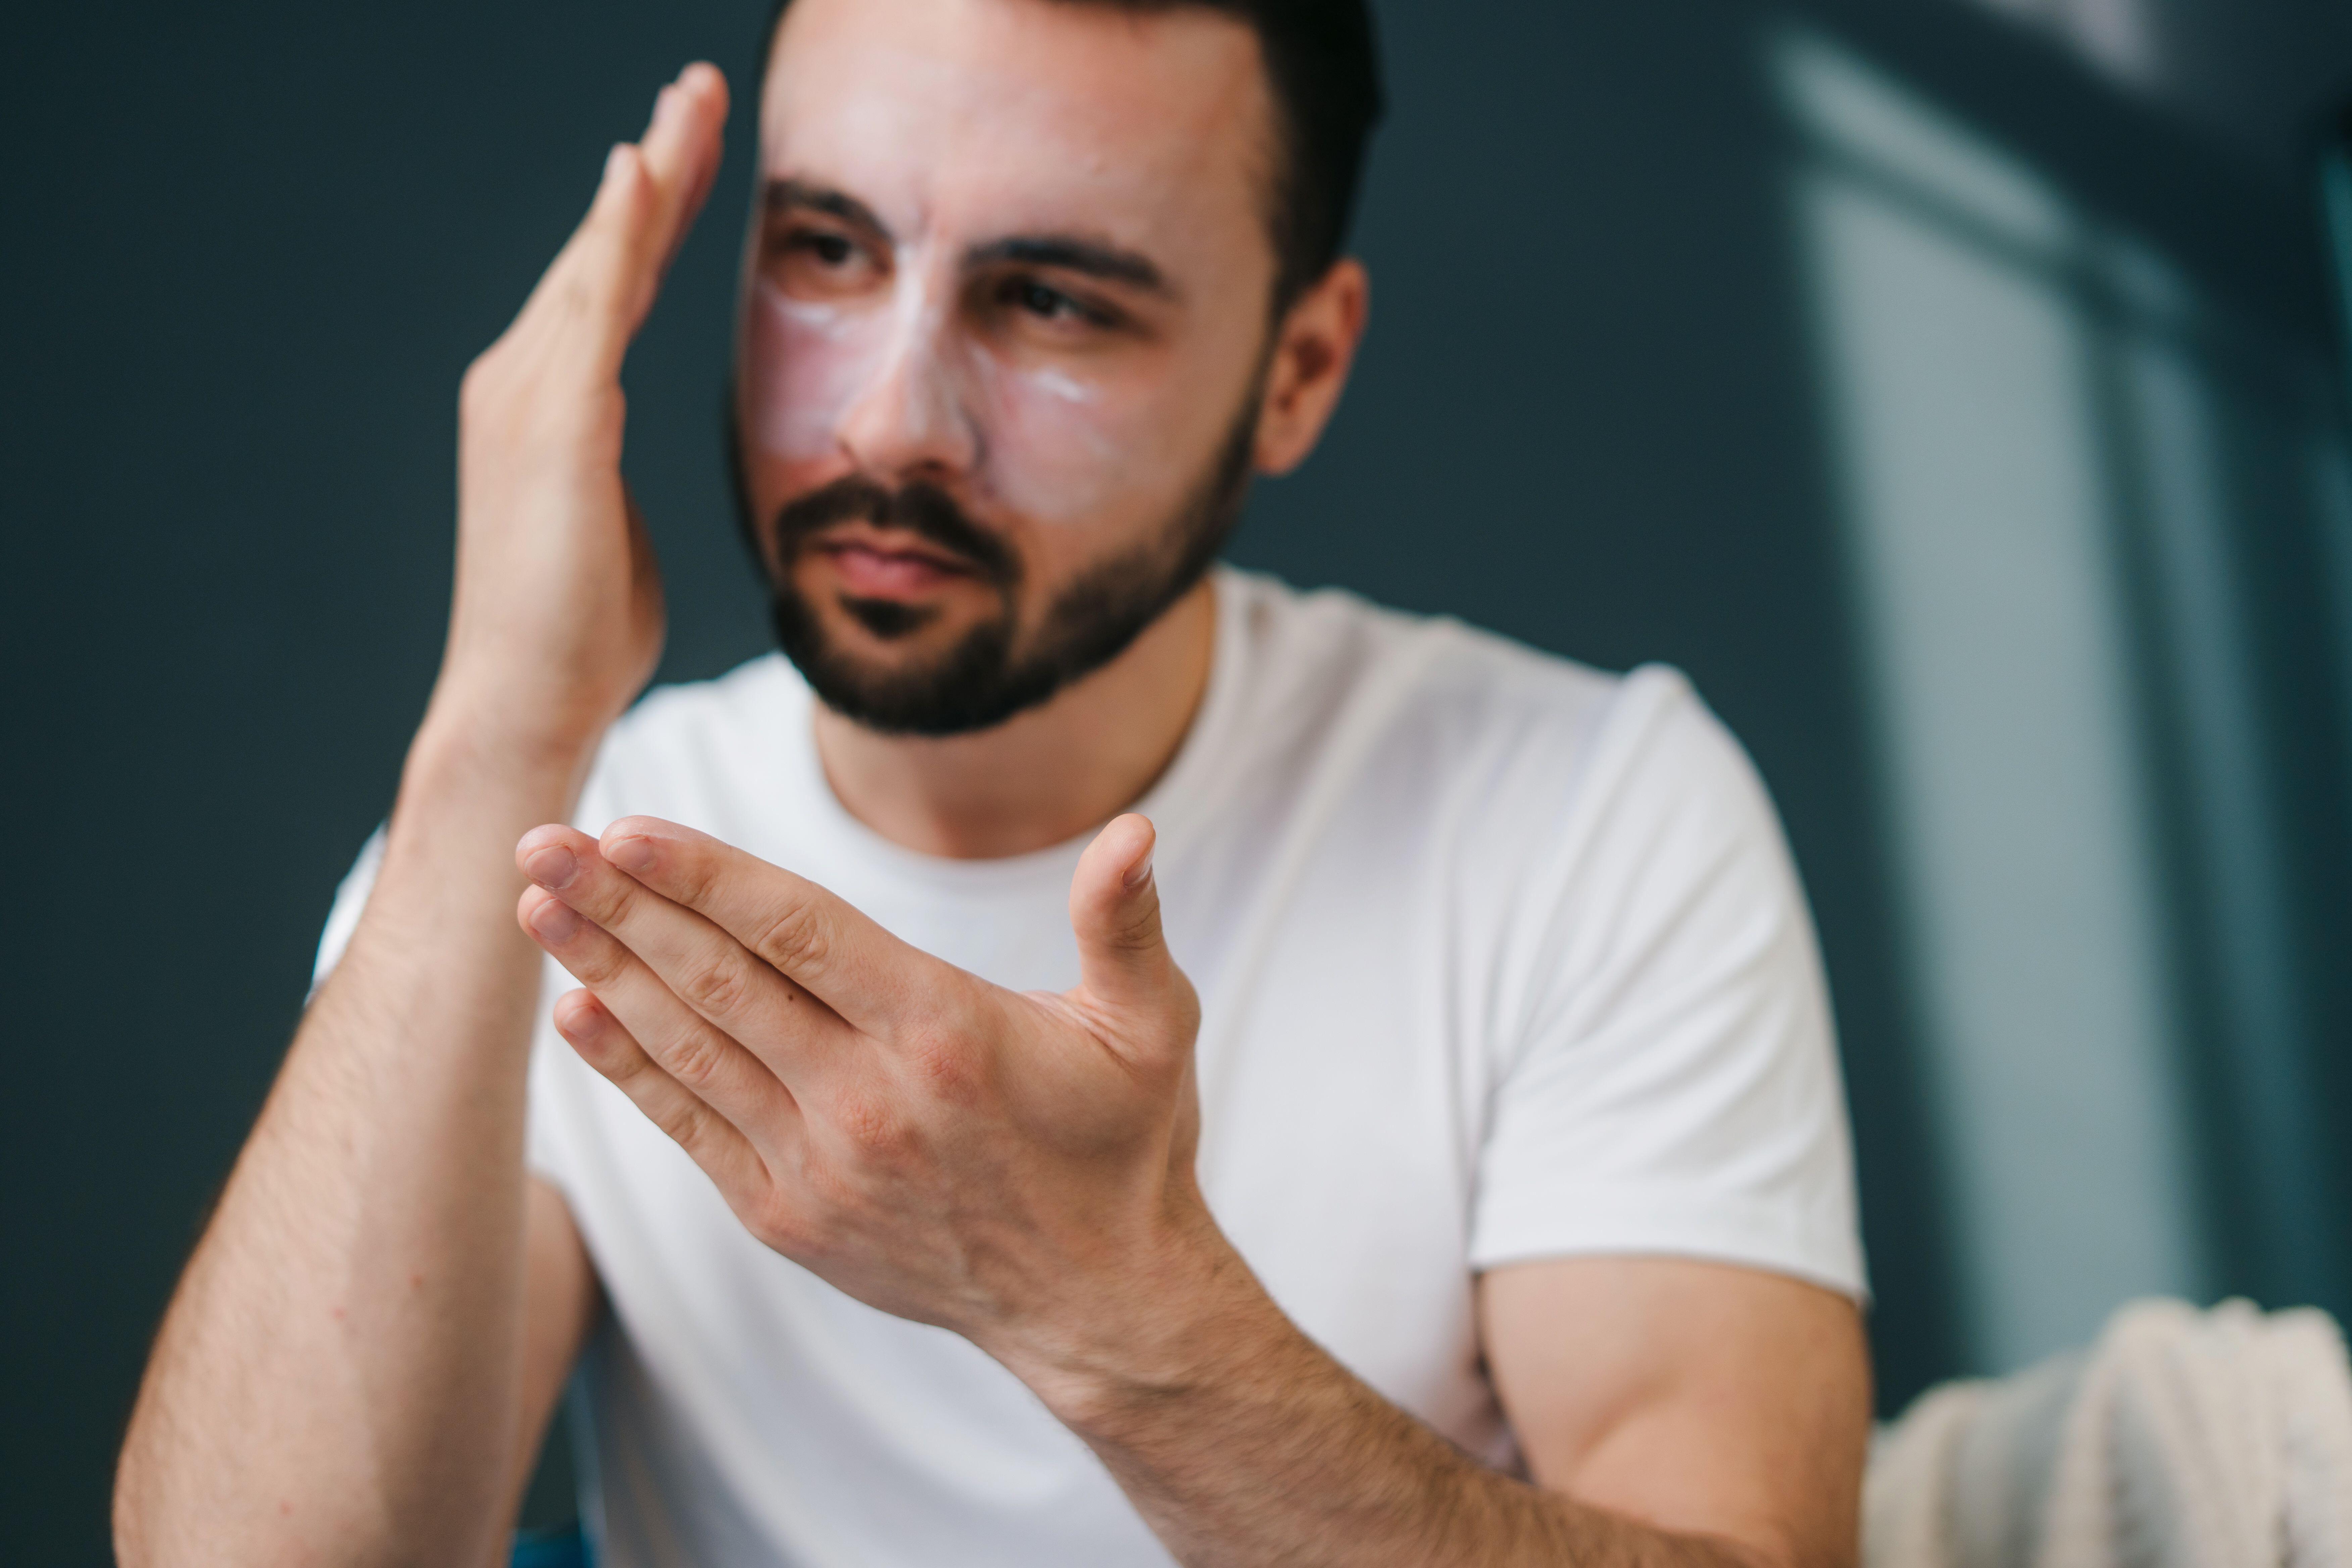 Man applying face cream